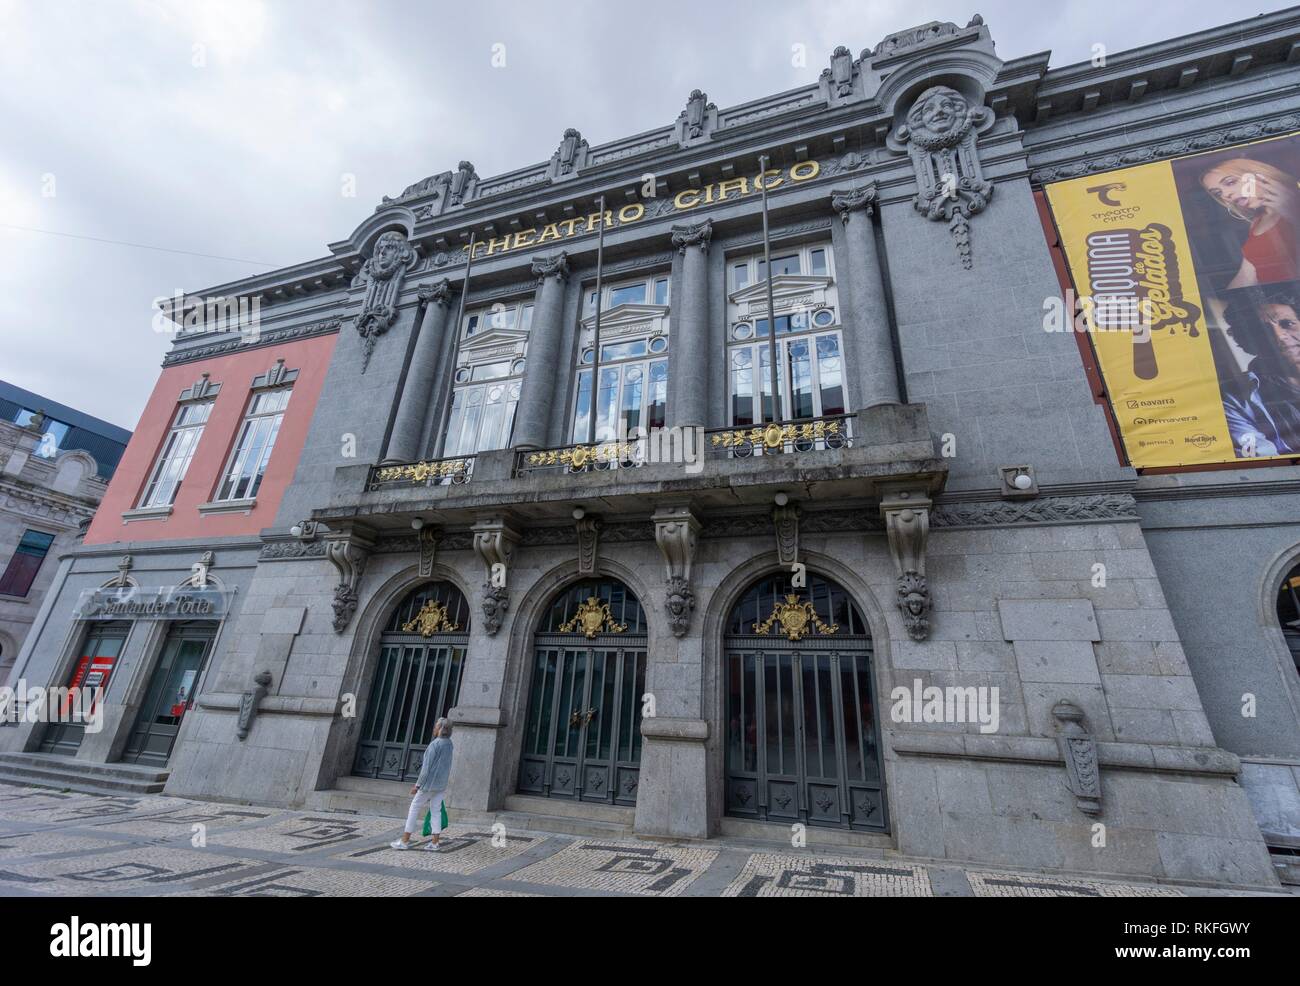 Teatro Circo, Braga, Portugal Stock Photo - Alamy